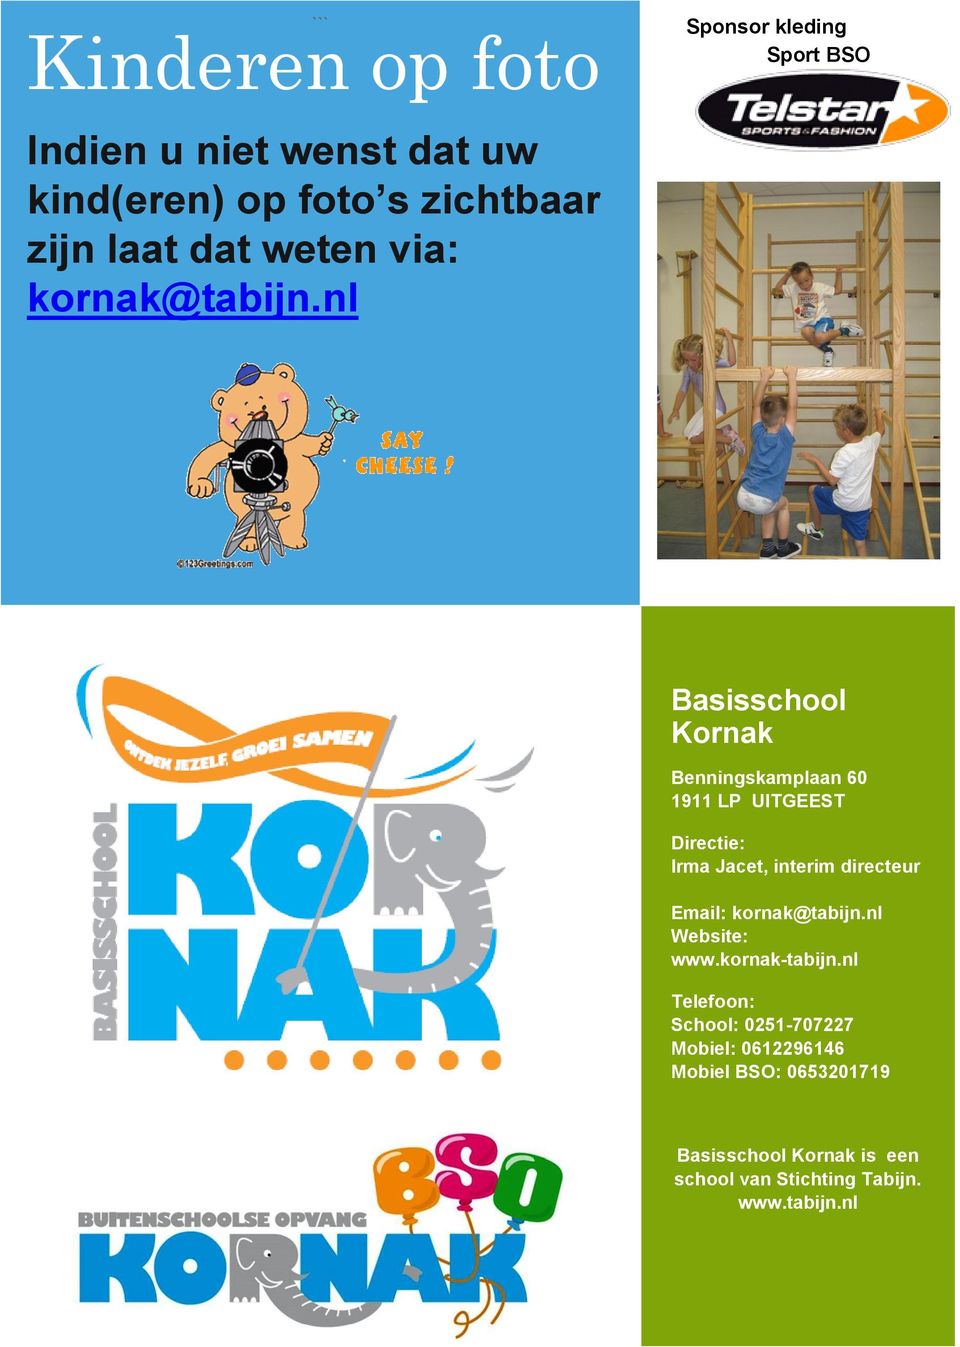 nl Sponsor kleding Sport BSO Basisschool Kornak Benningskamplaan 60 1911 LP UITGEEST Directie: Irma Jacet,